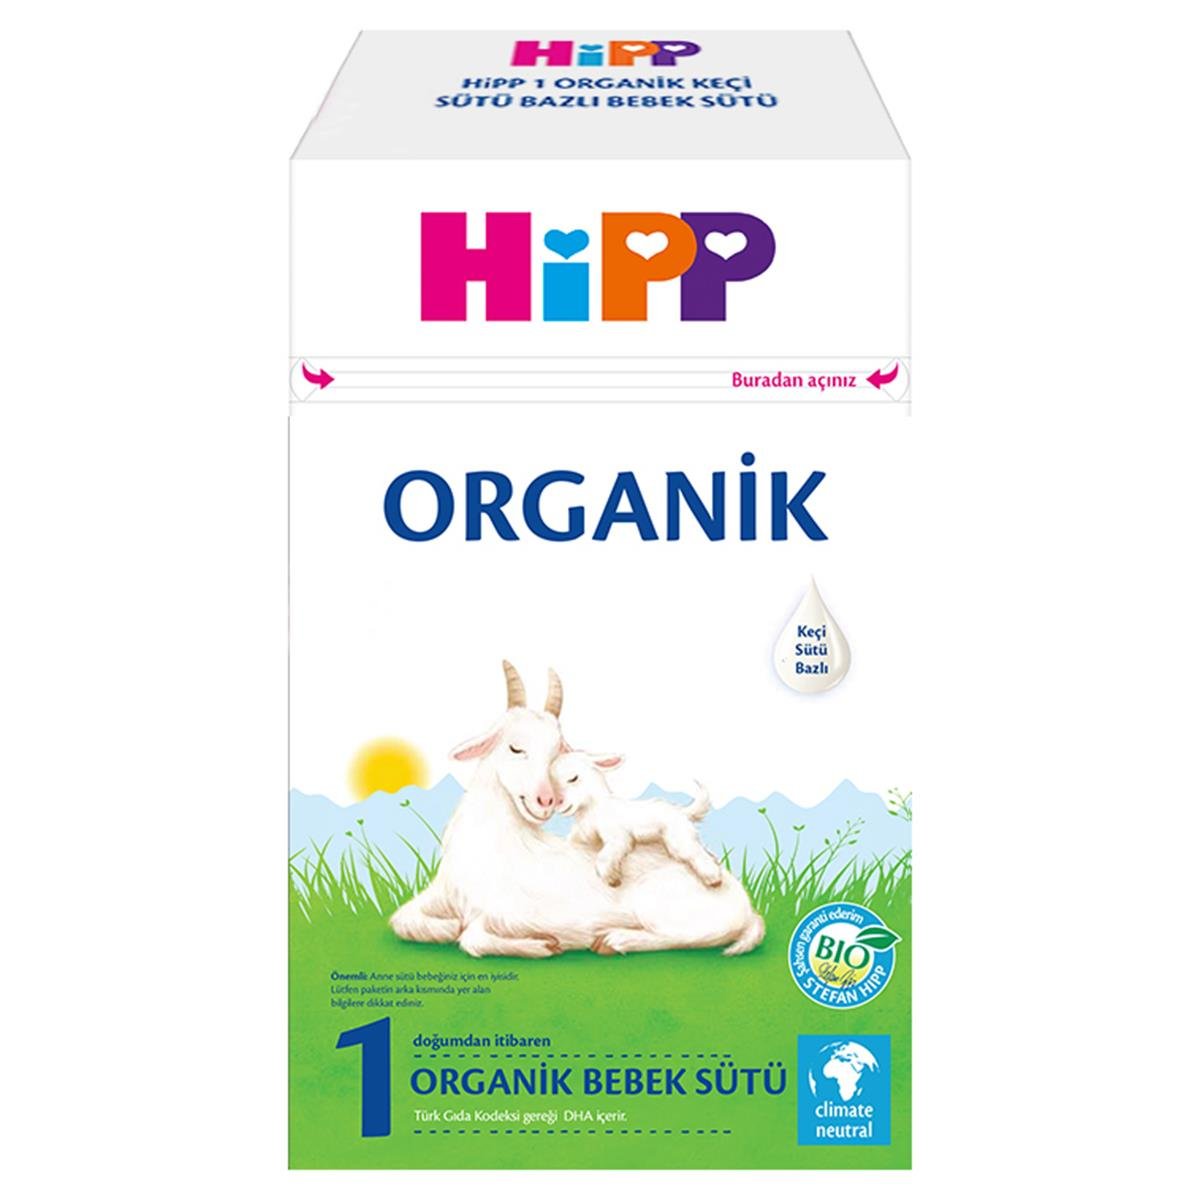 Hipp 1 Organik Keçi Sütlü Bebek Sütü 400 gr 0-6 Ay - Onur Market